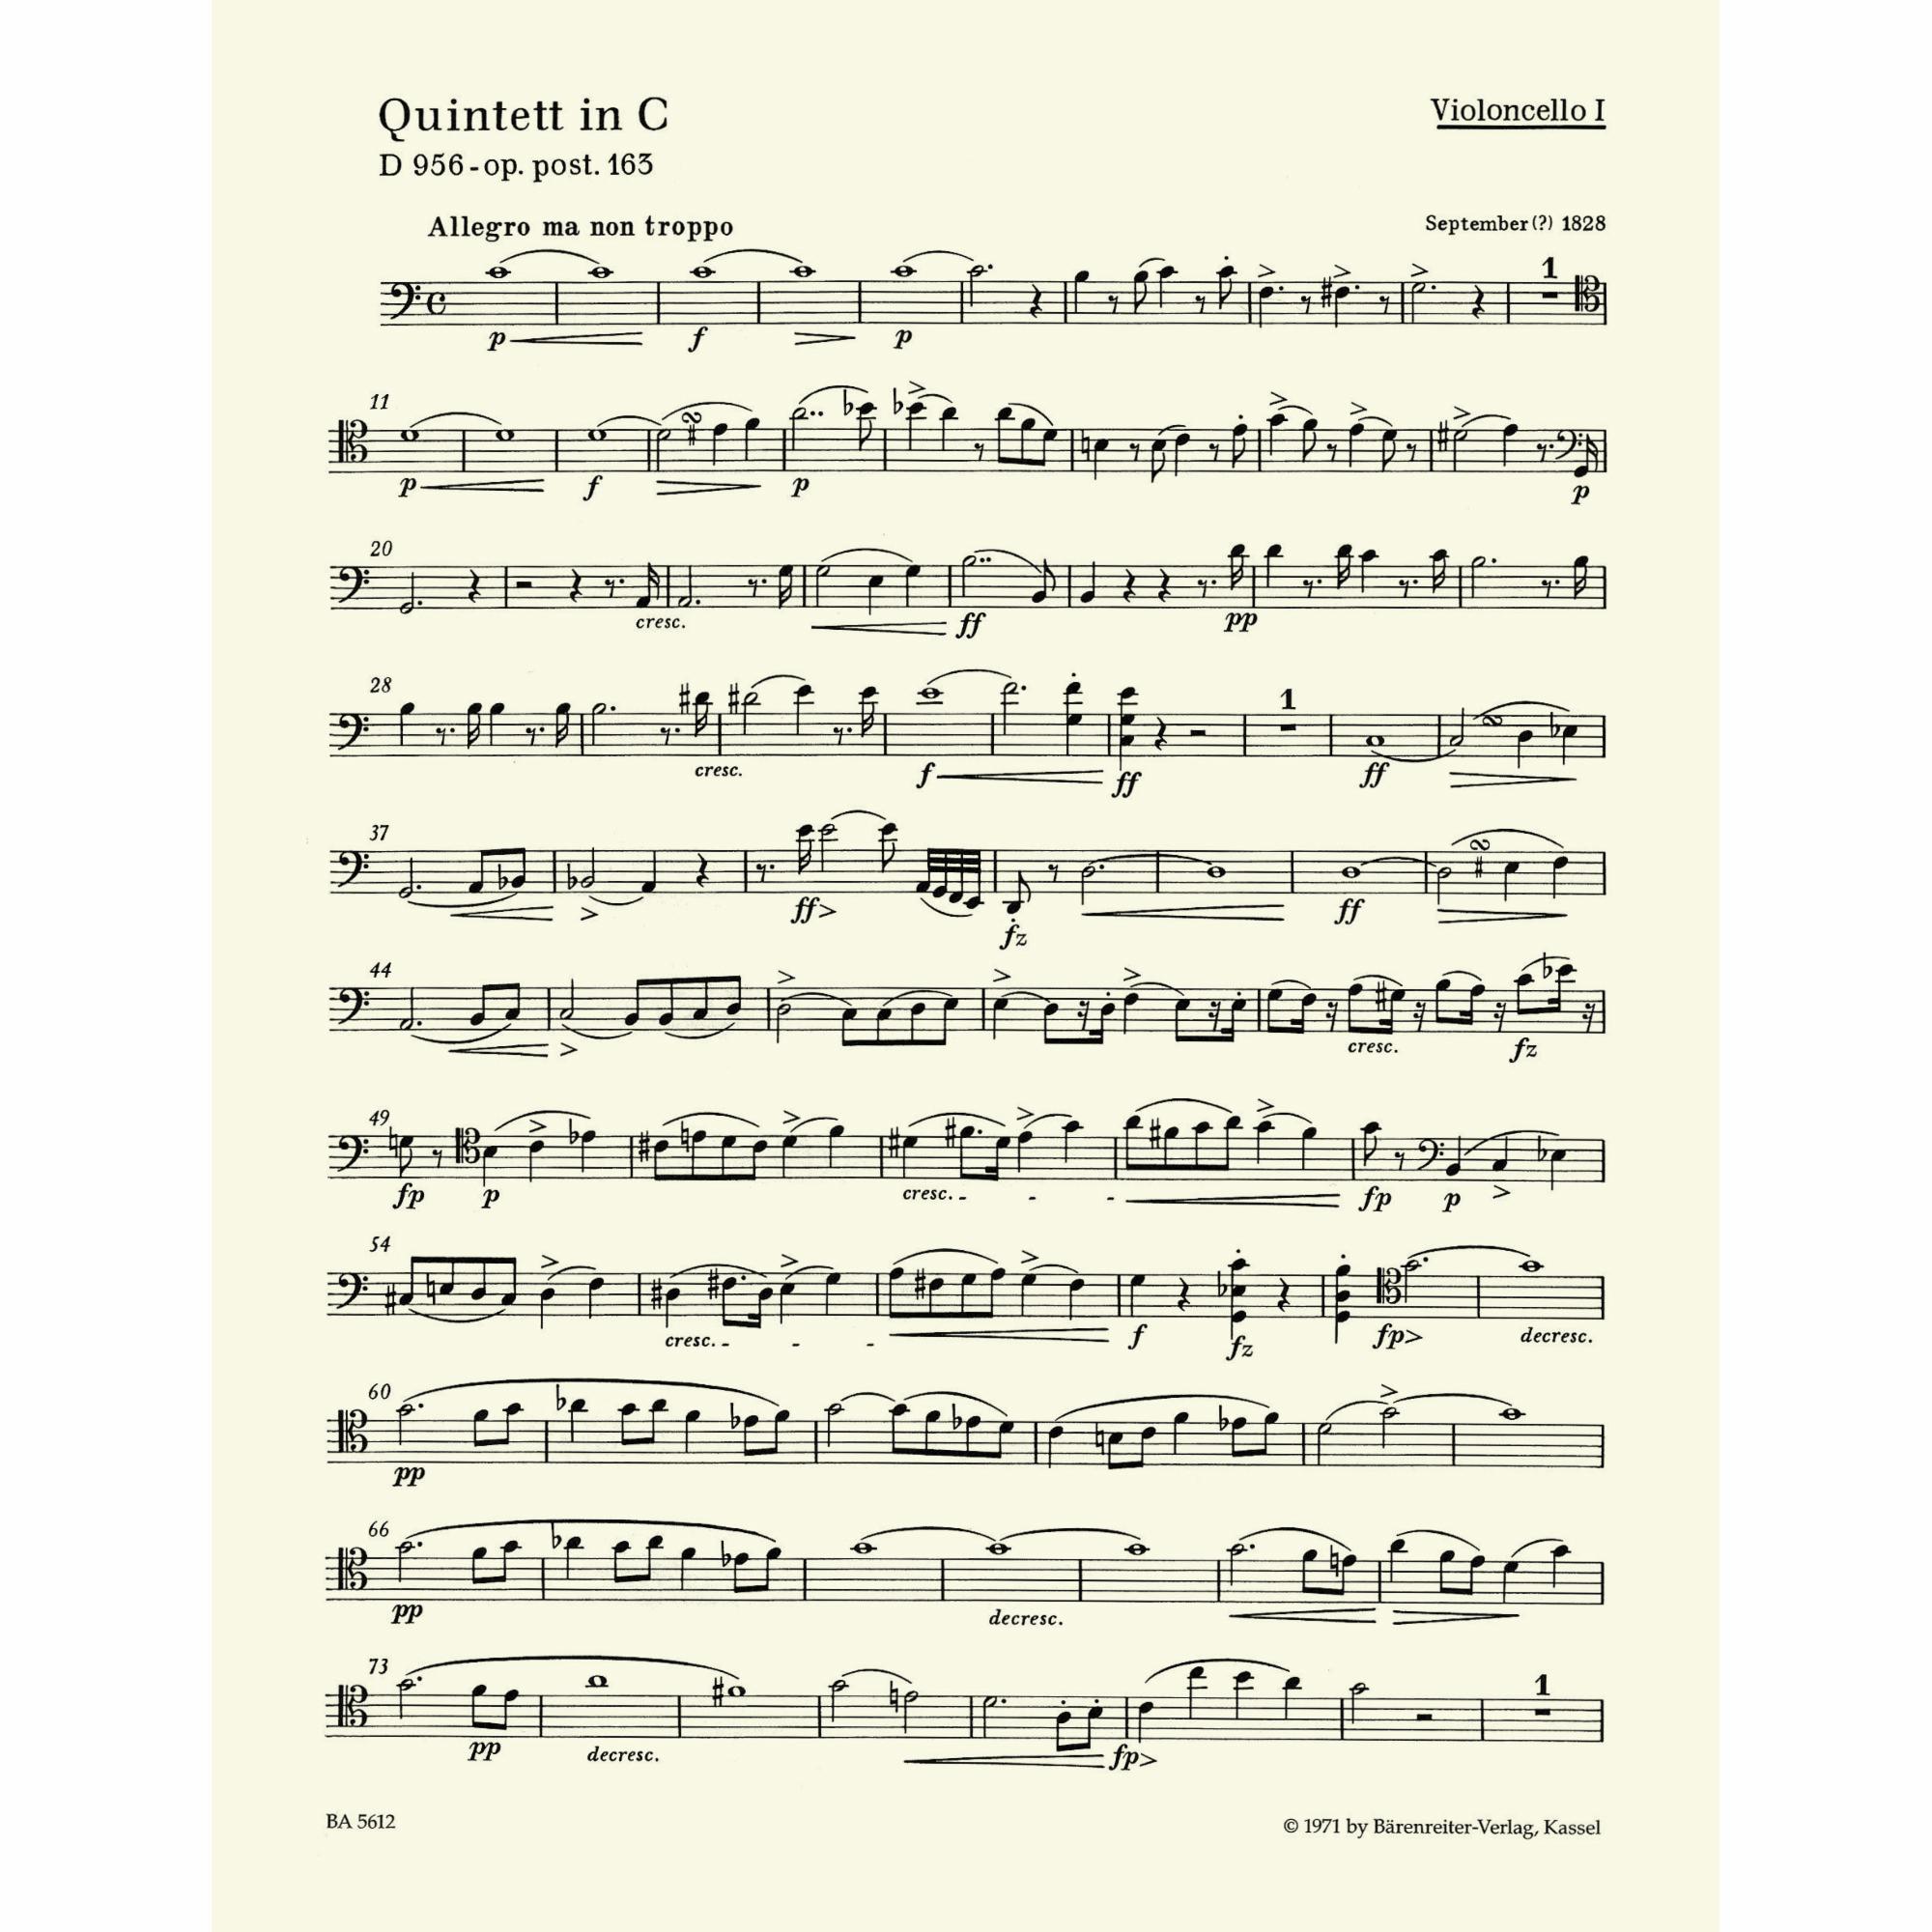 Sample: Cello I (Pg. 3)